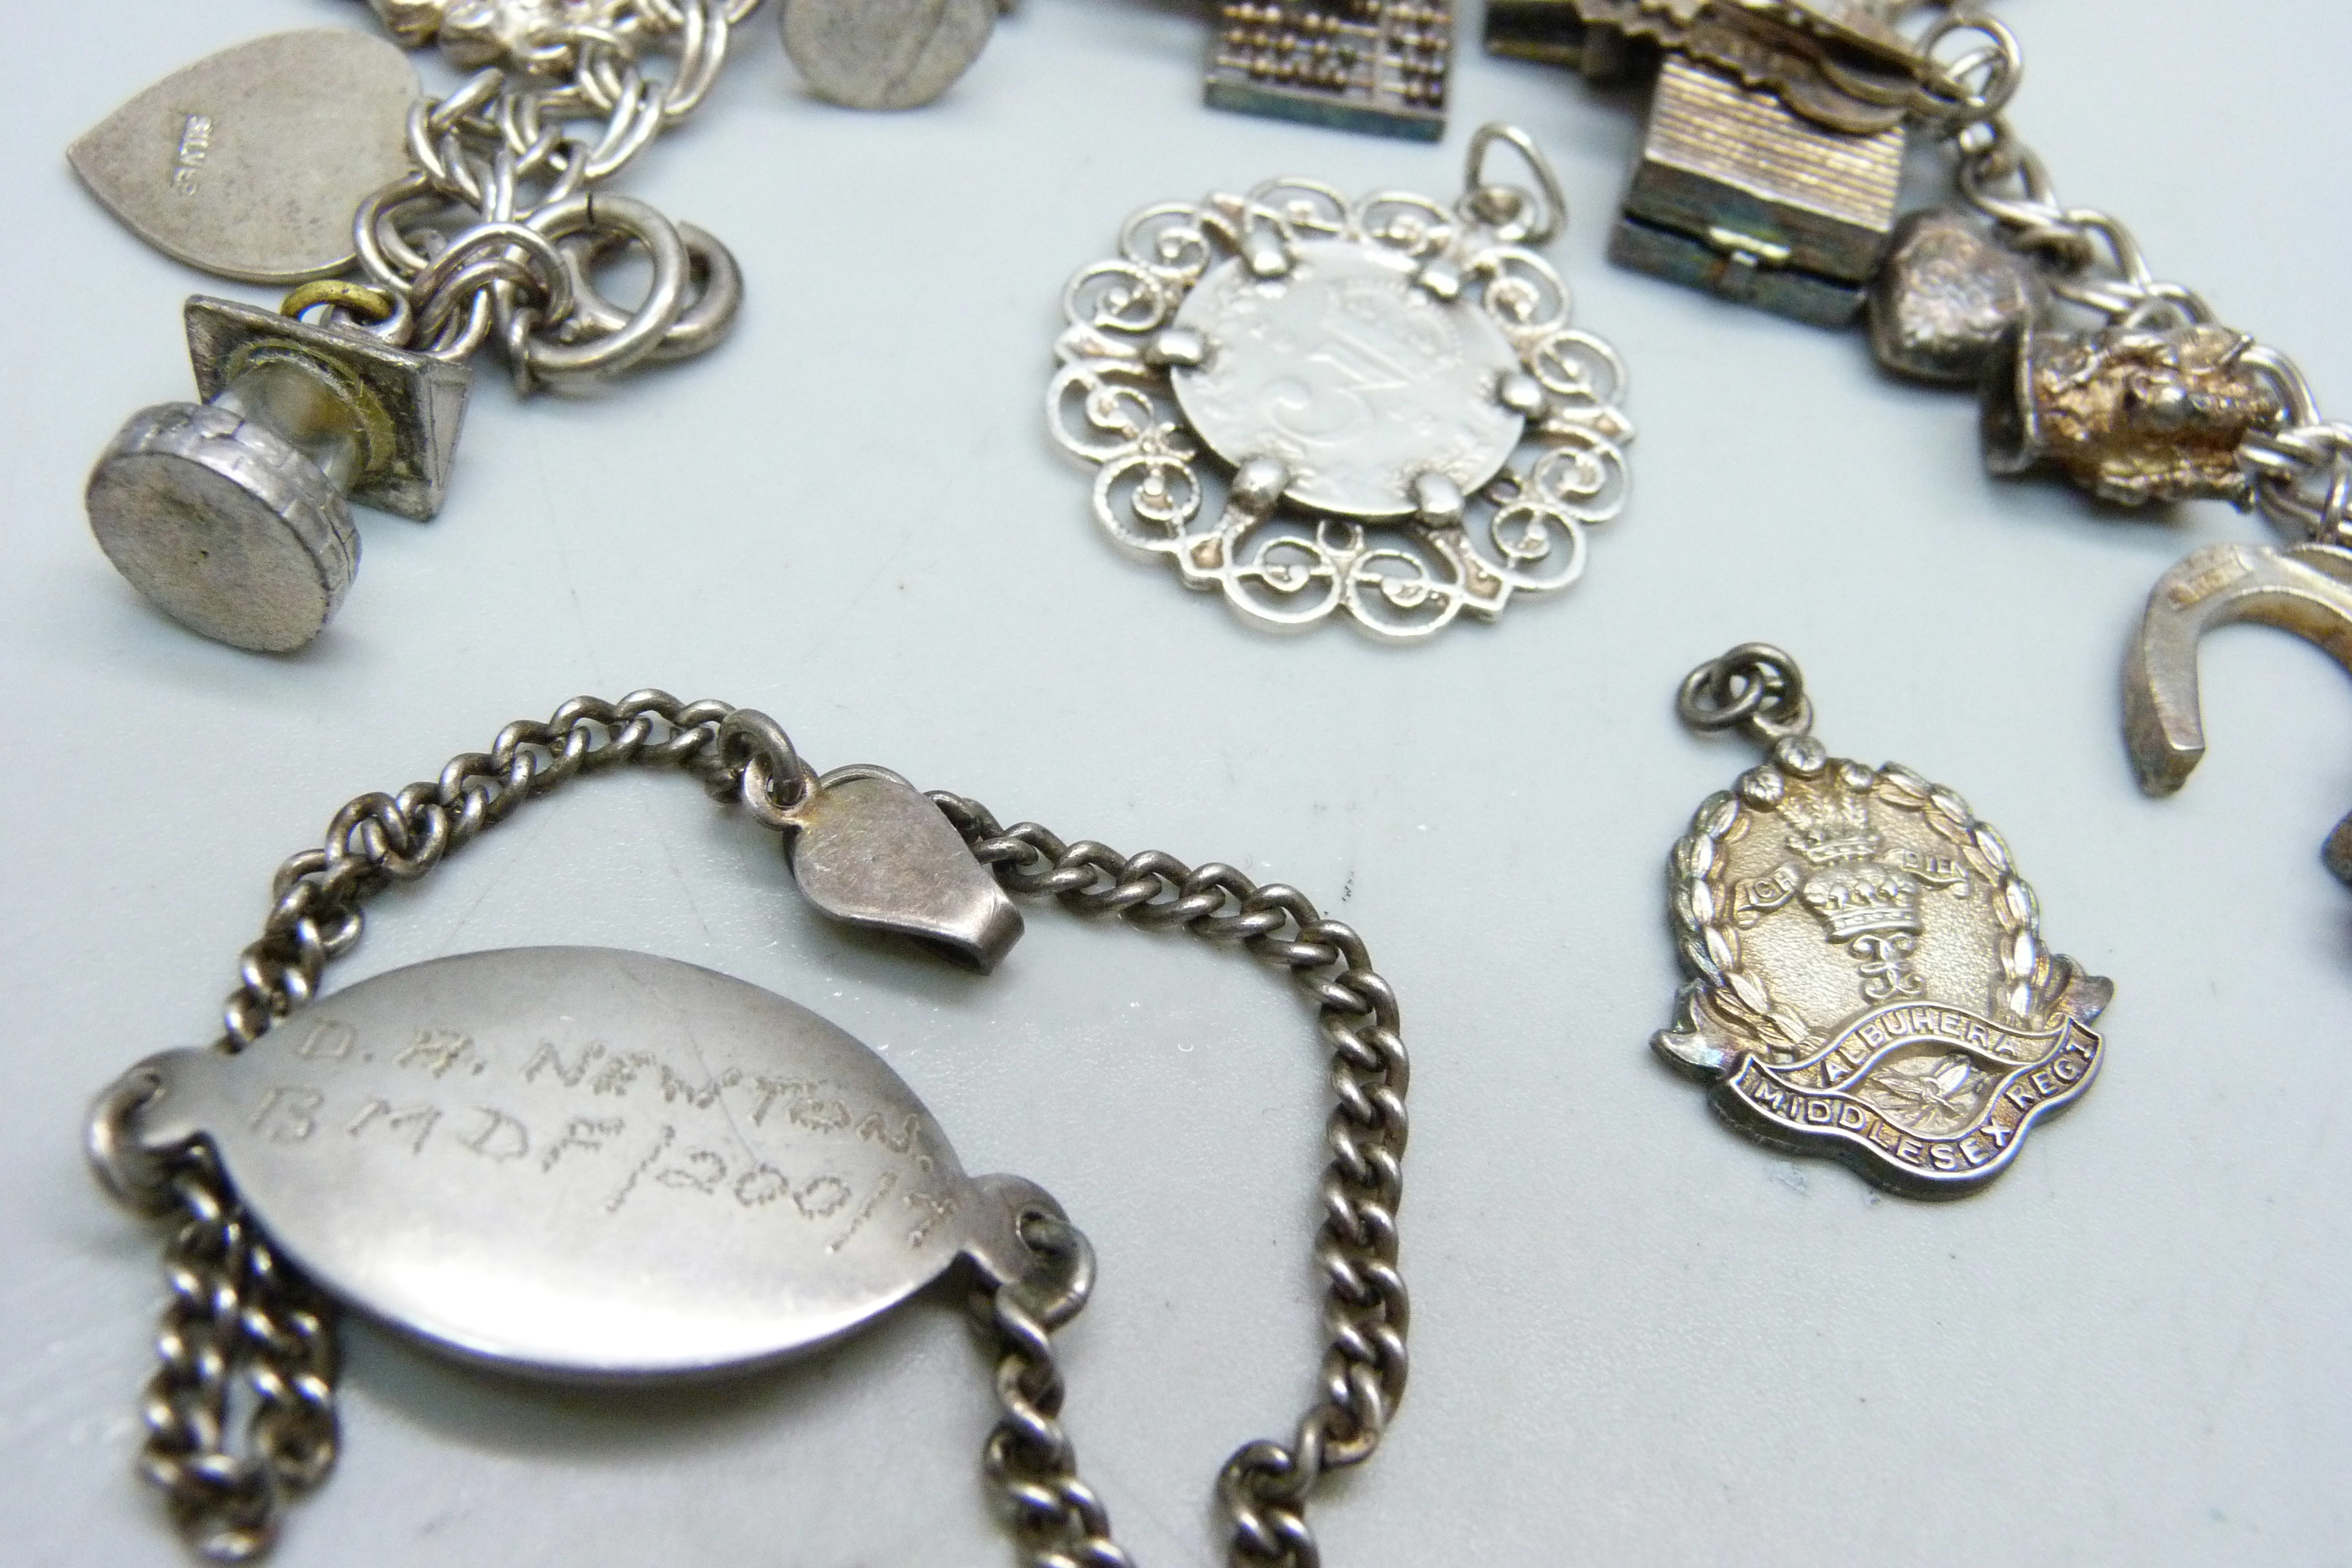 A silver charm bracelet, two silver pendants and a bracelet, 68g - Image 3 of 4